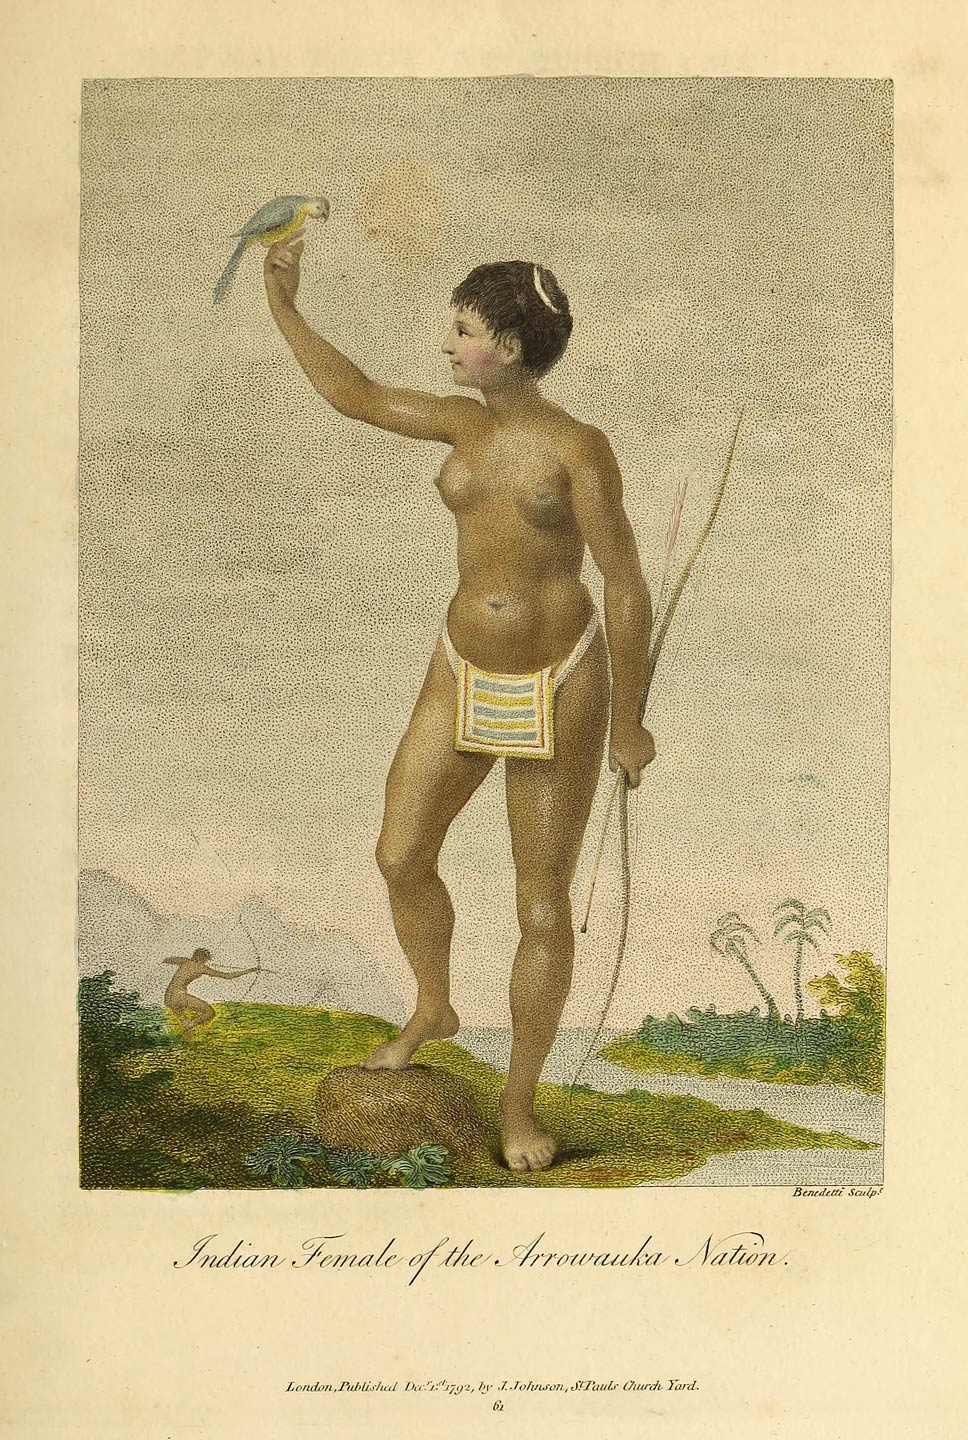 Indian Female of the Arrowauka Nation.